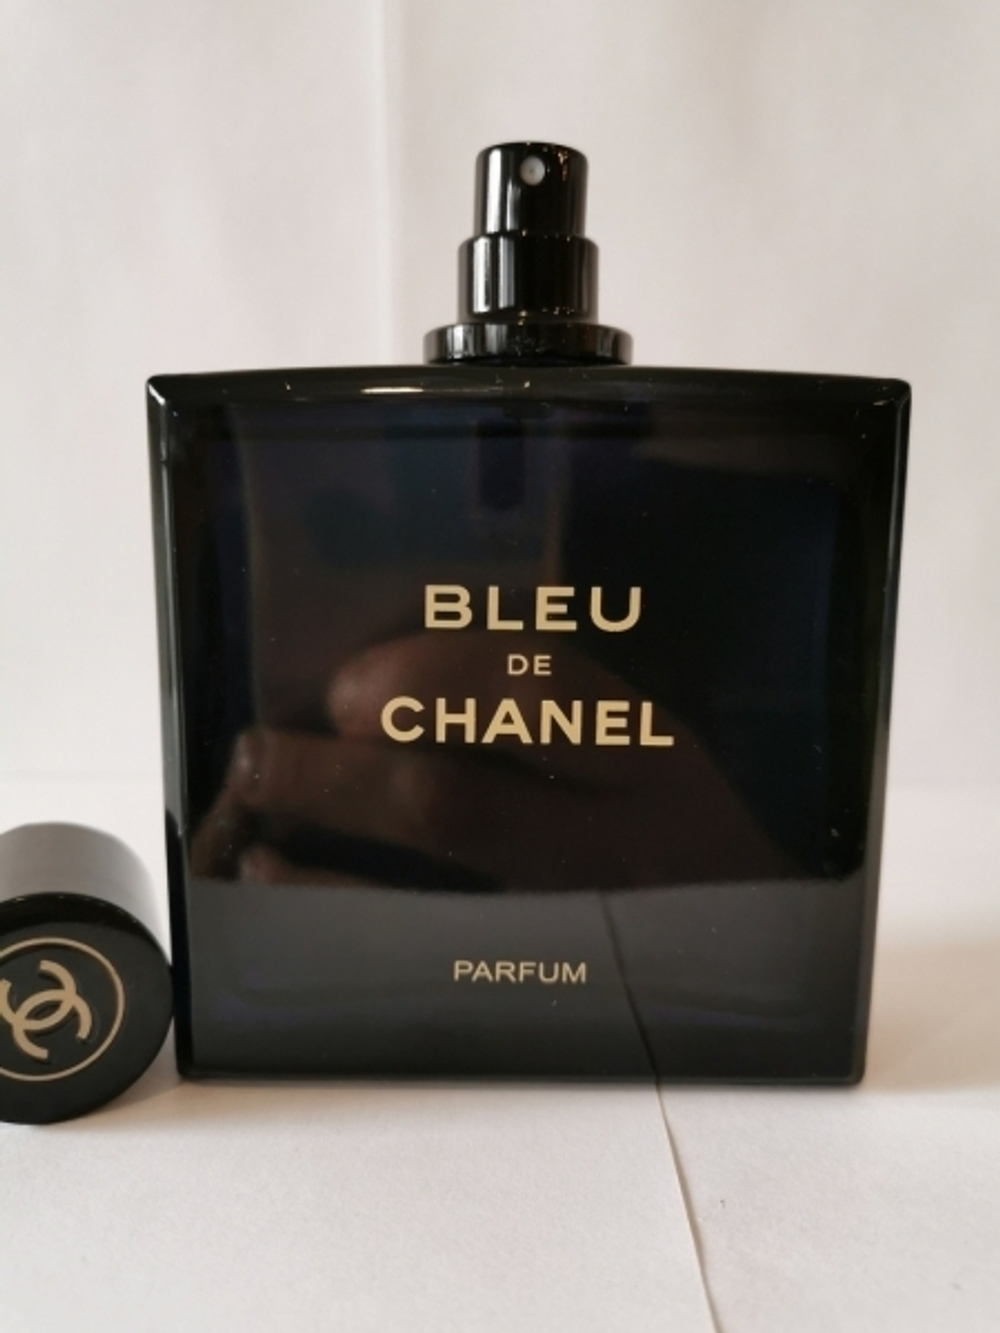 Chanel Bleu De Chanel Parfum 2018 (duty free парфюмерия) 100ml